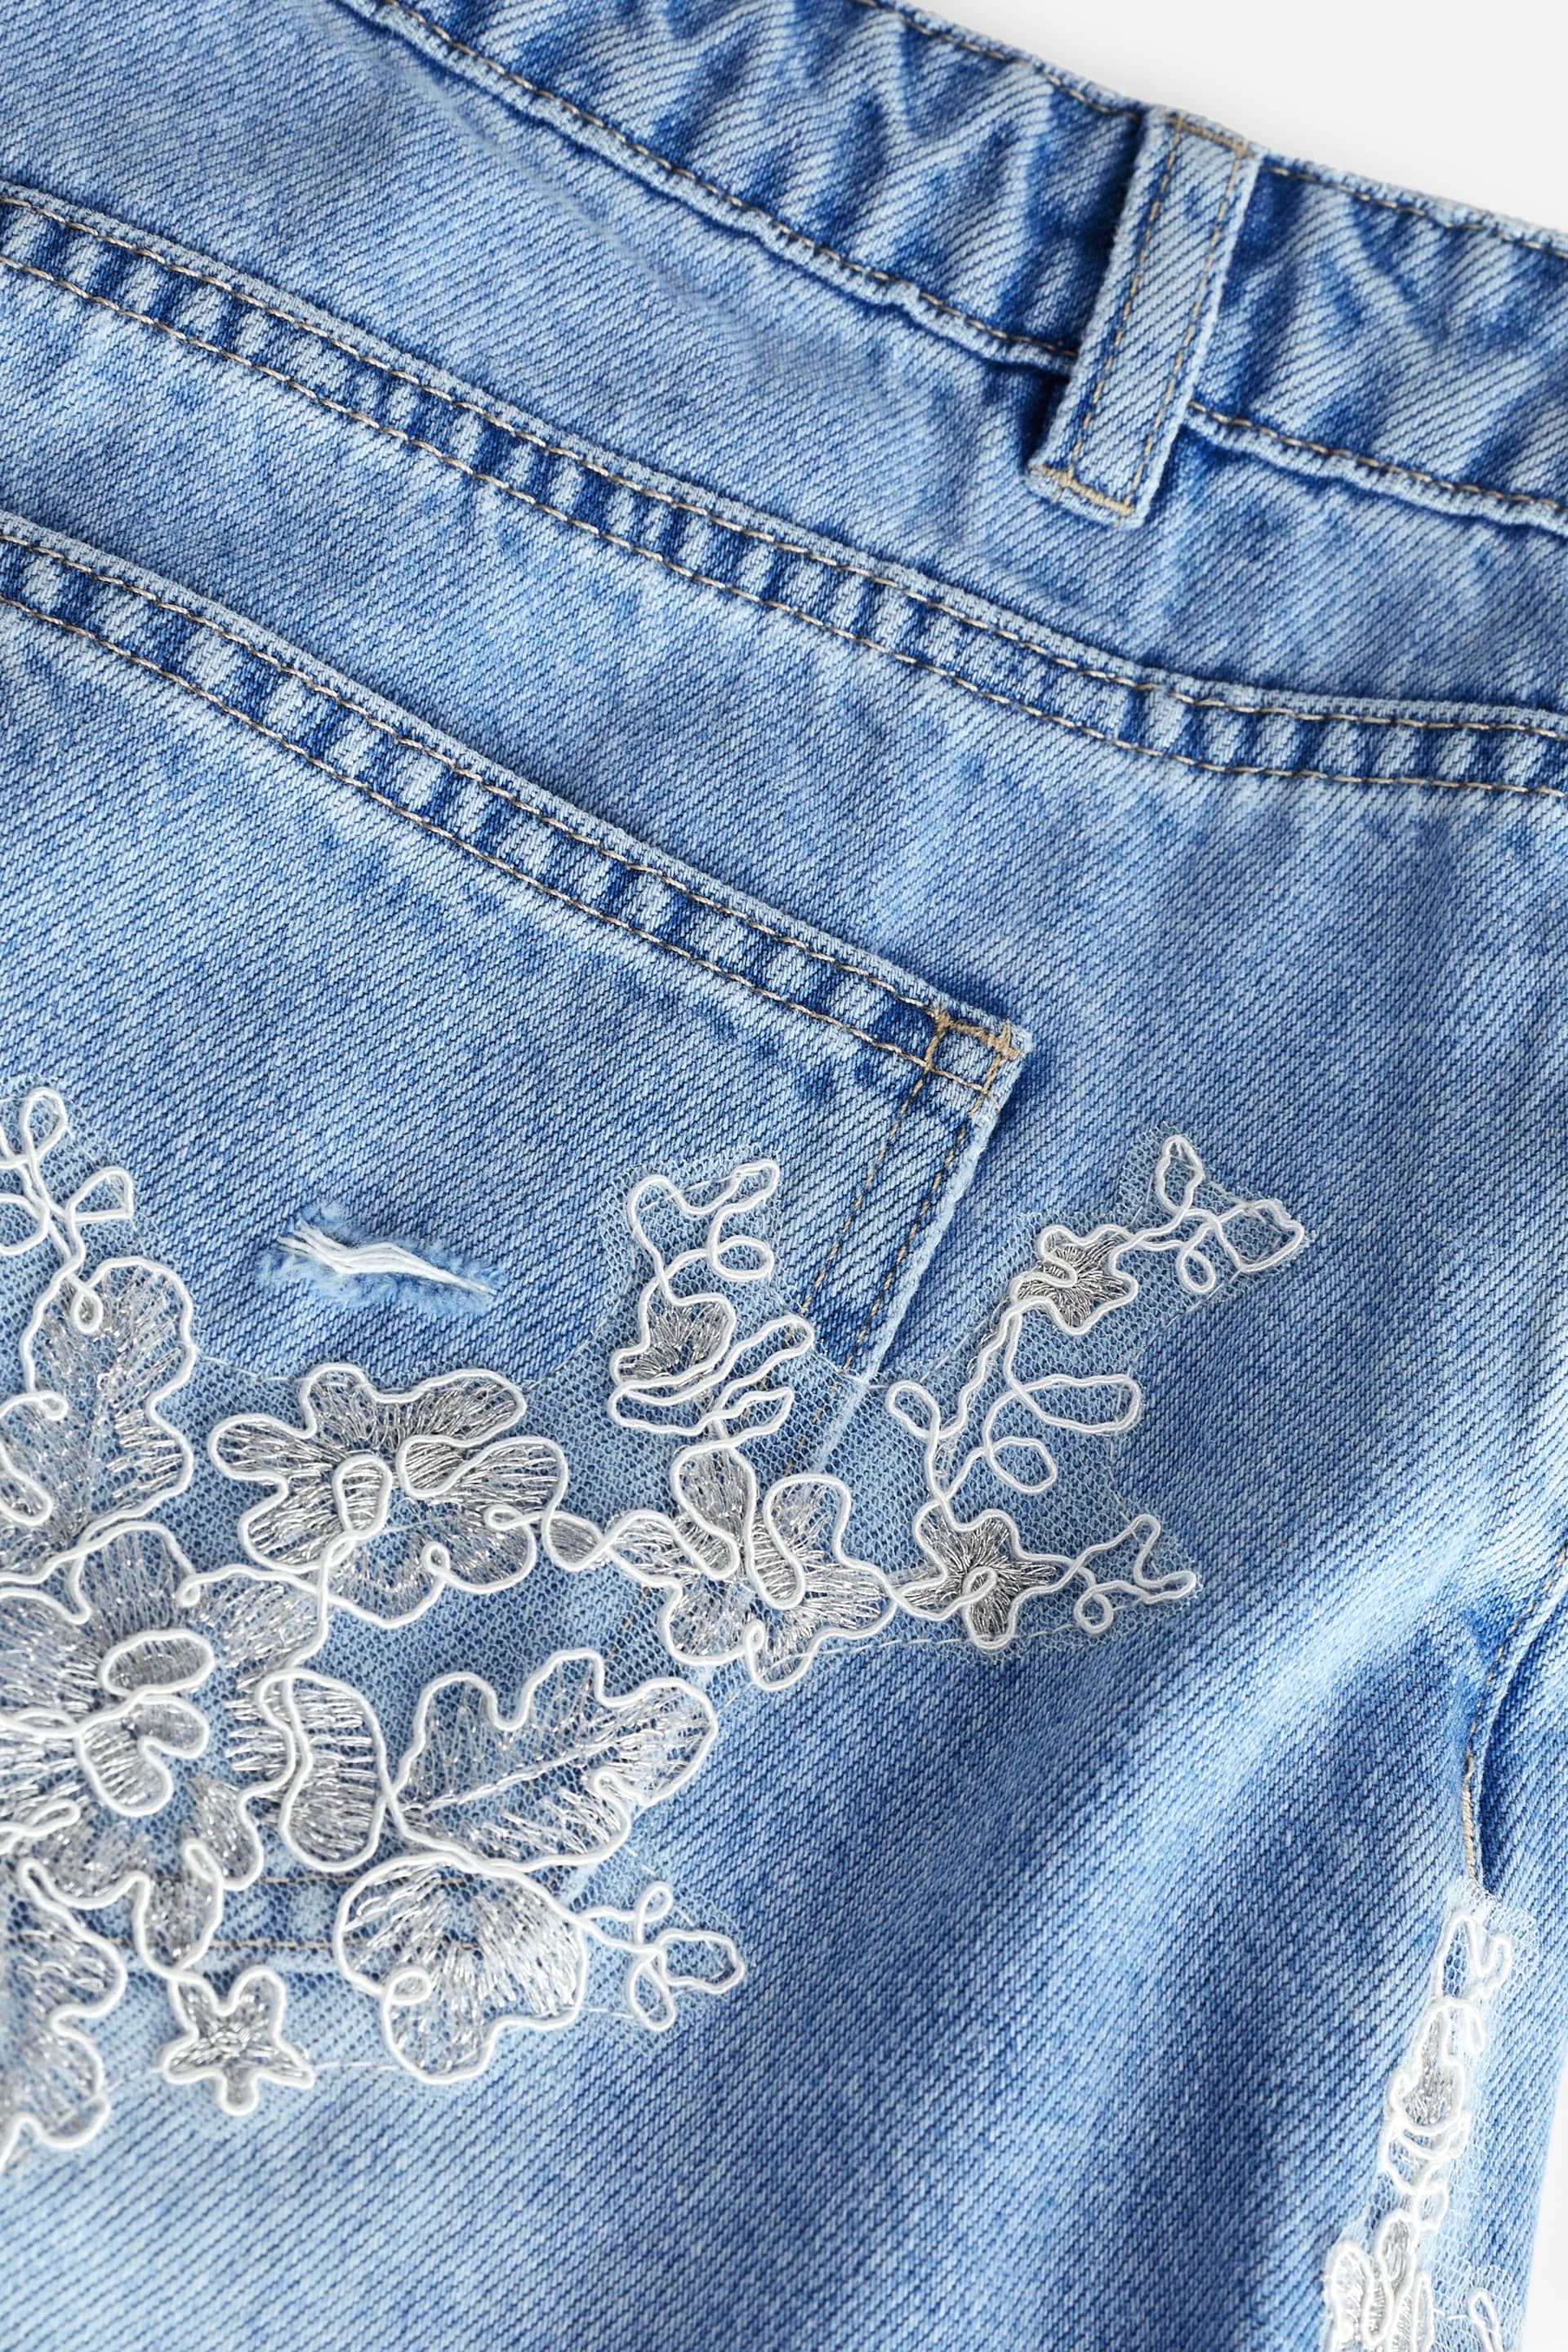 Mid Blue Lace Denim Shorts - Image 6 of 6